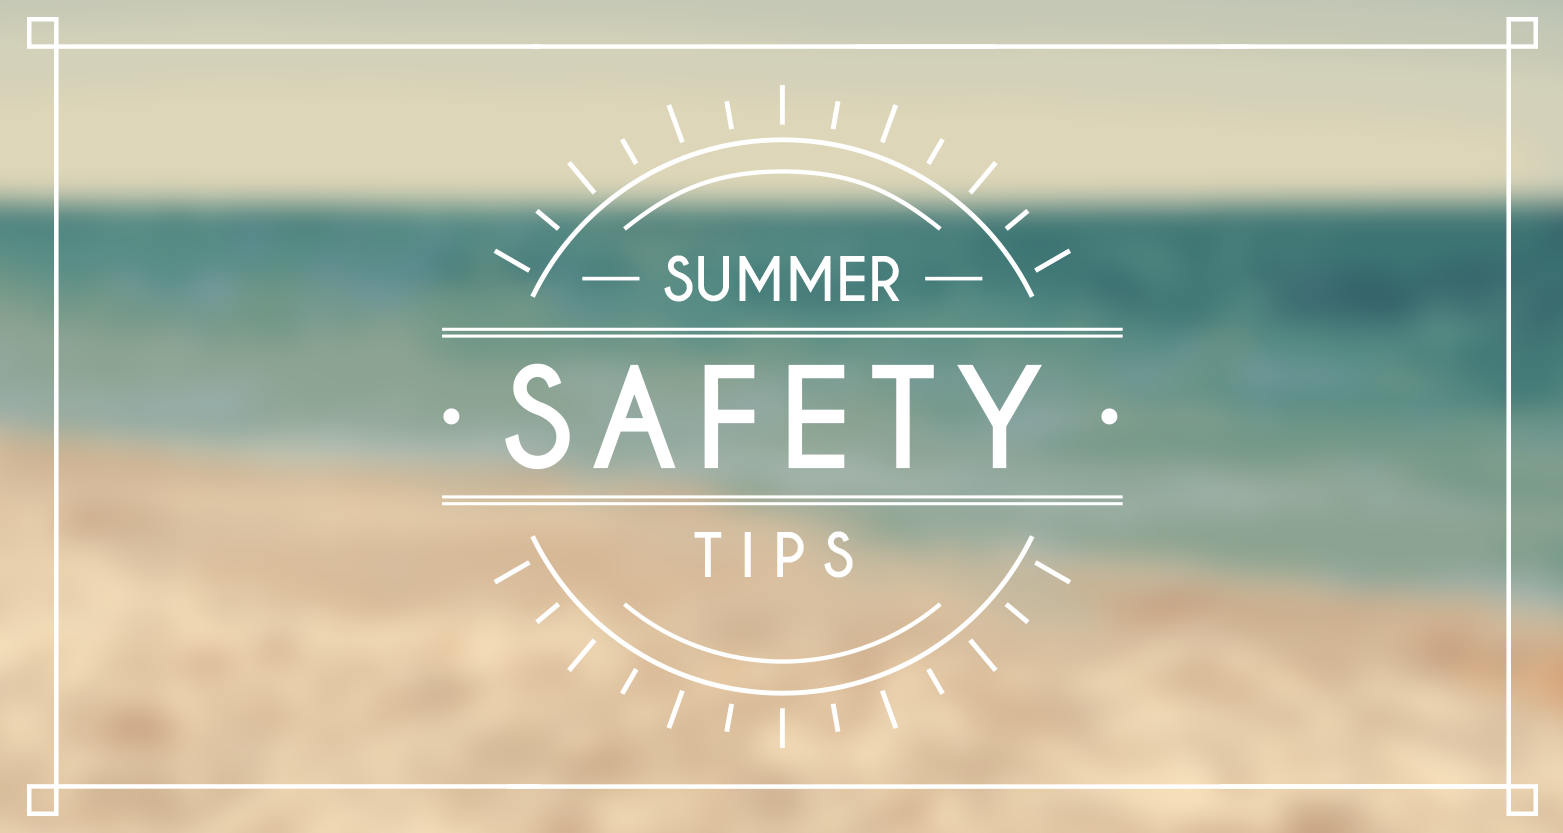 Summer safety tips for kids